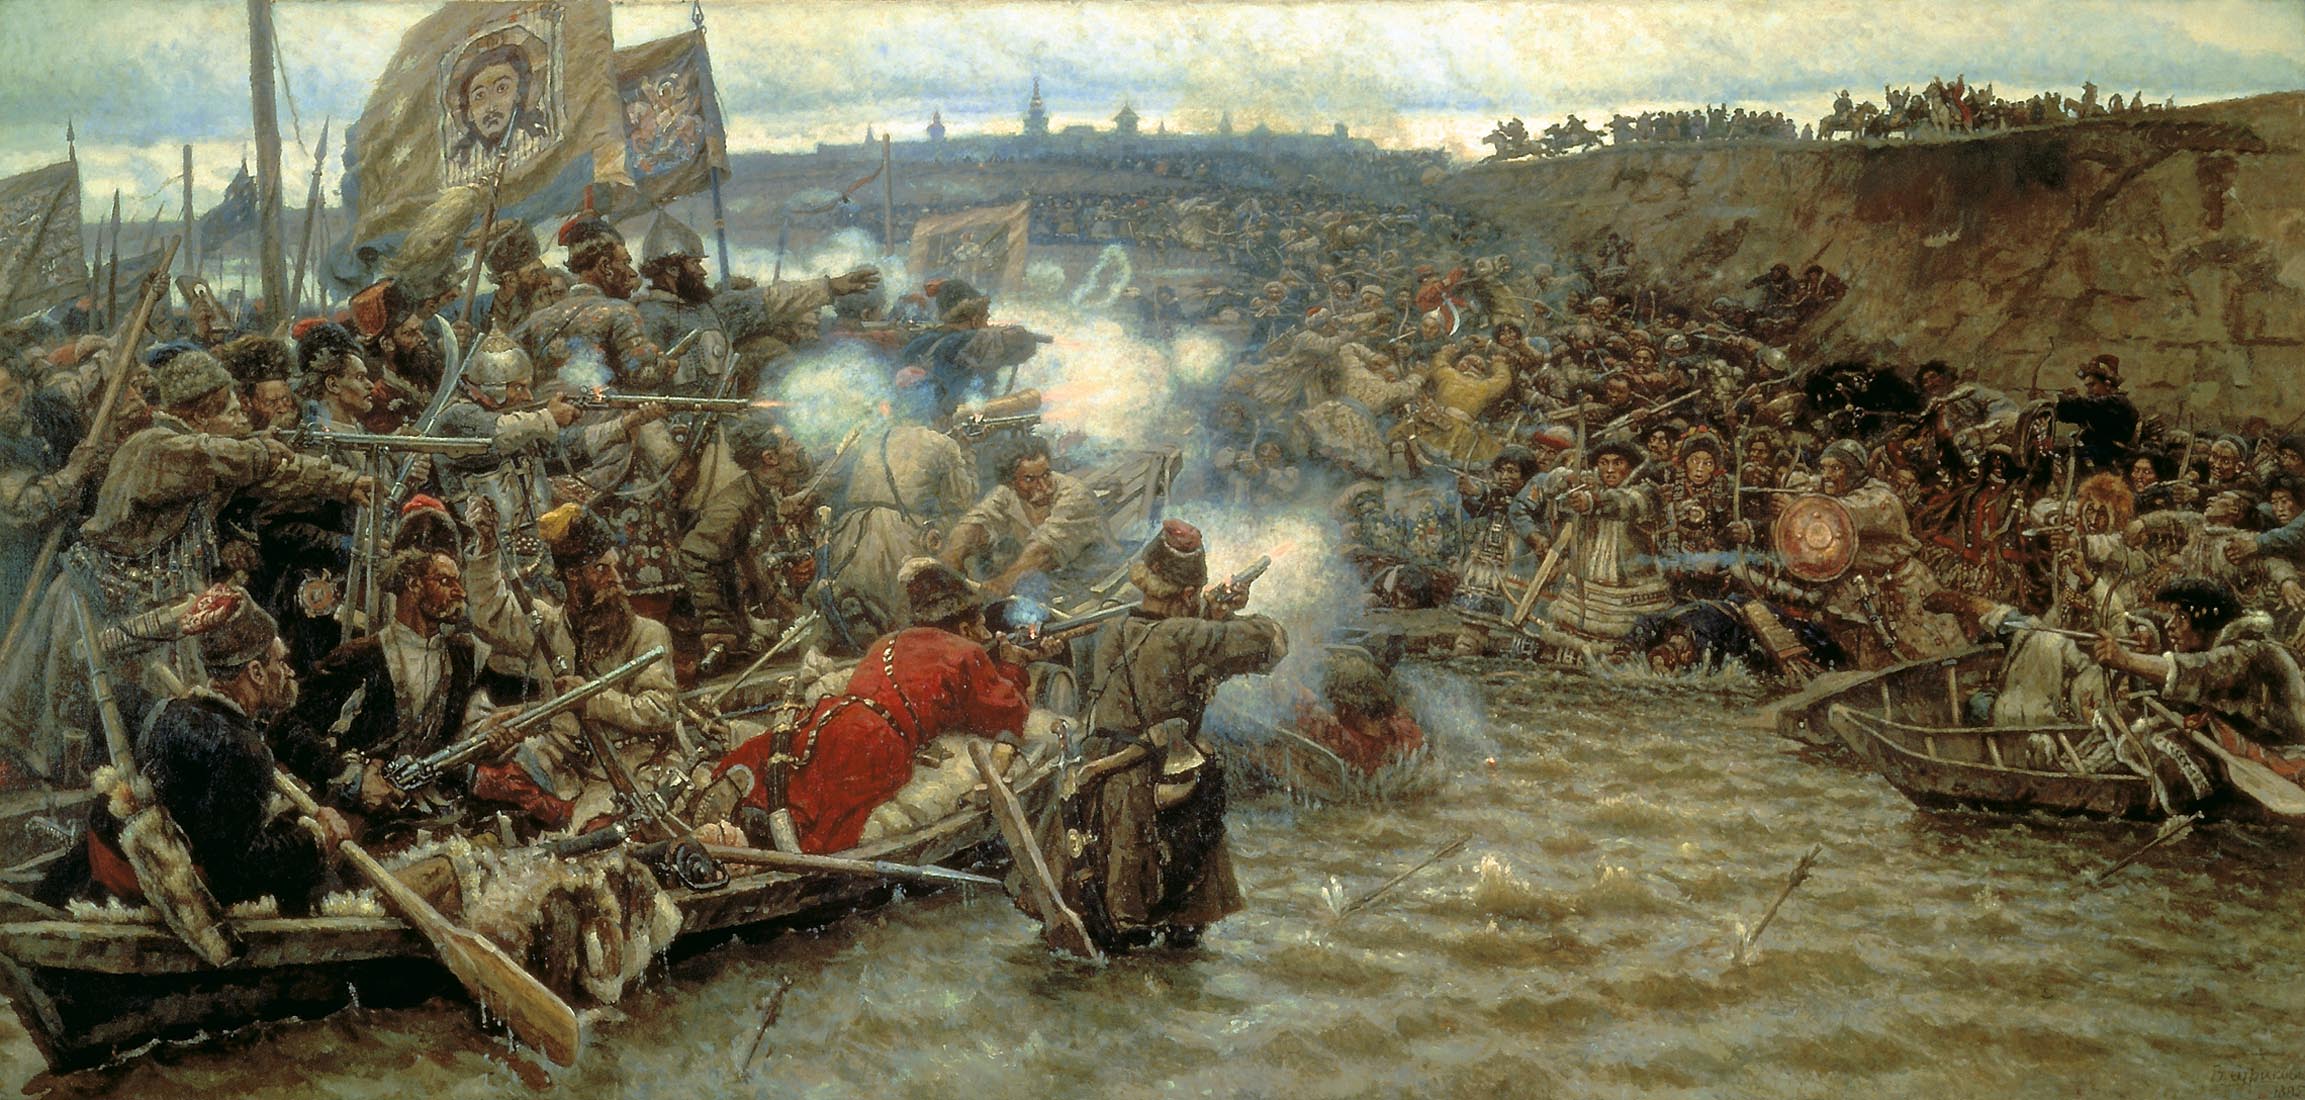 Surikov's breathtaking battle scene wallpaper